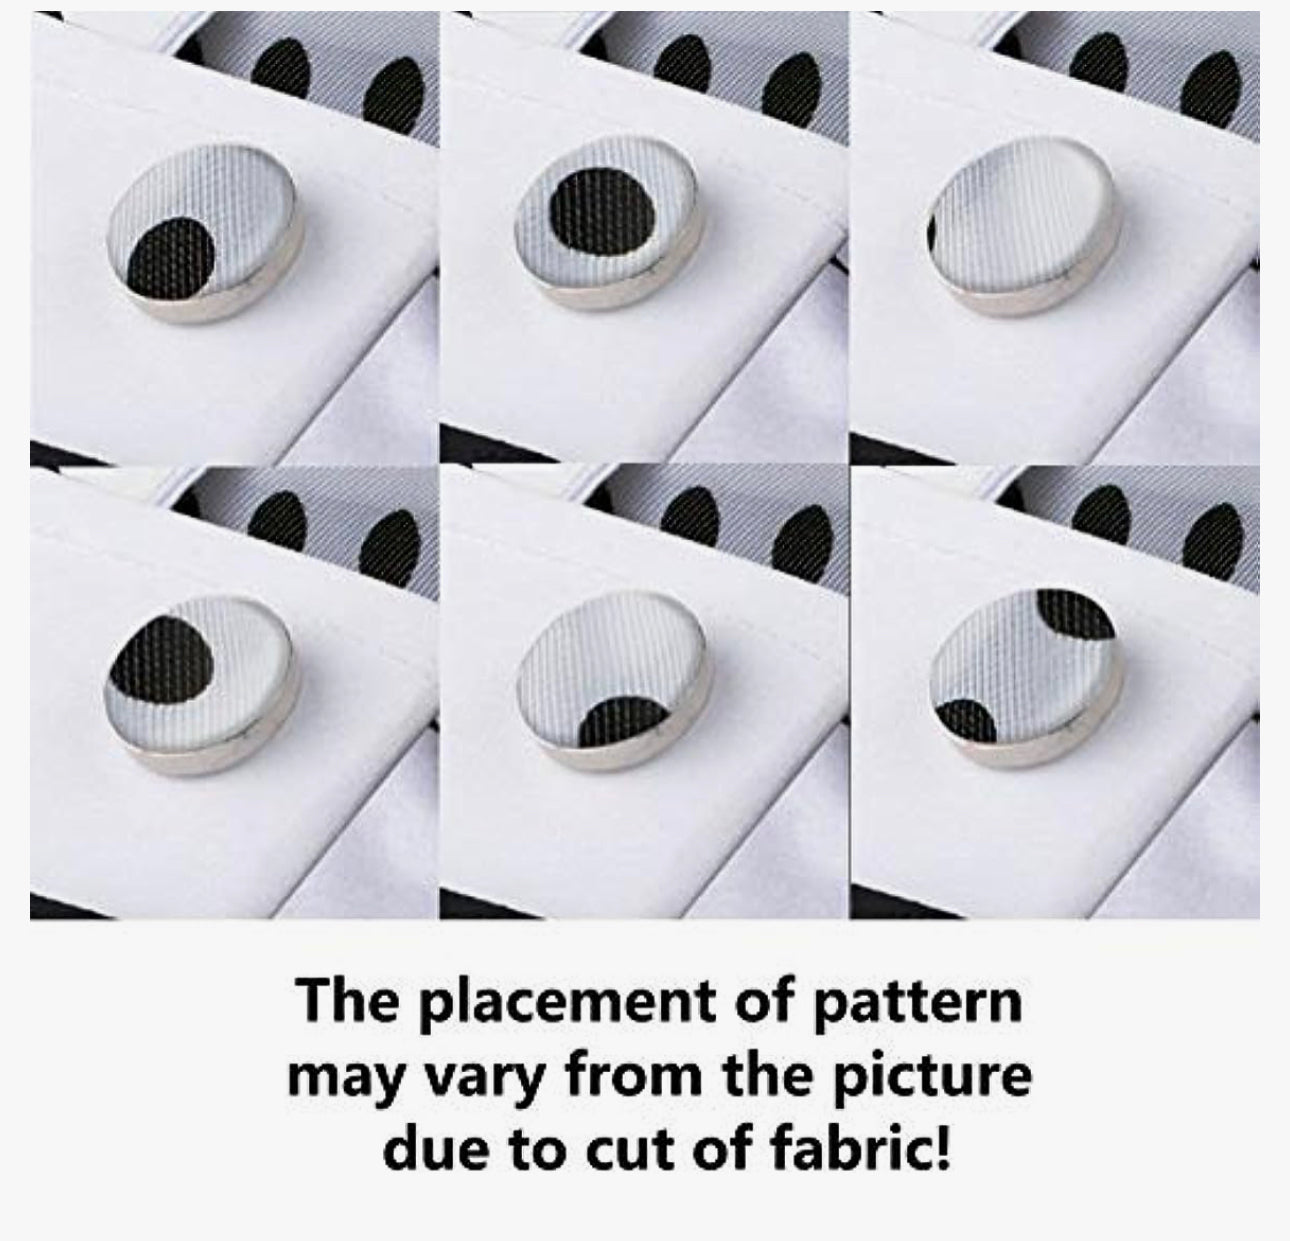 Men’s Silk Coordinated Tie Set - White with Black Polka Dots